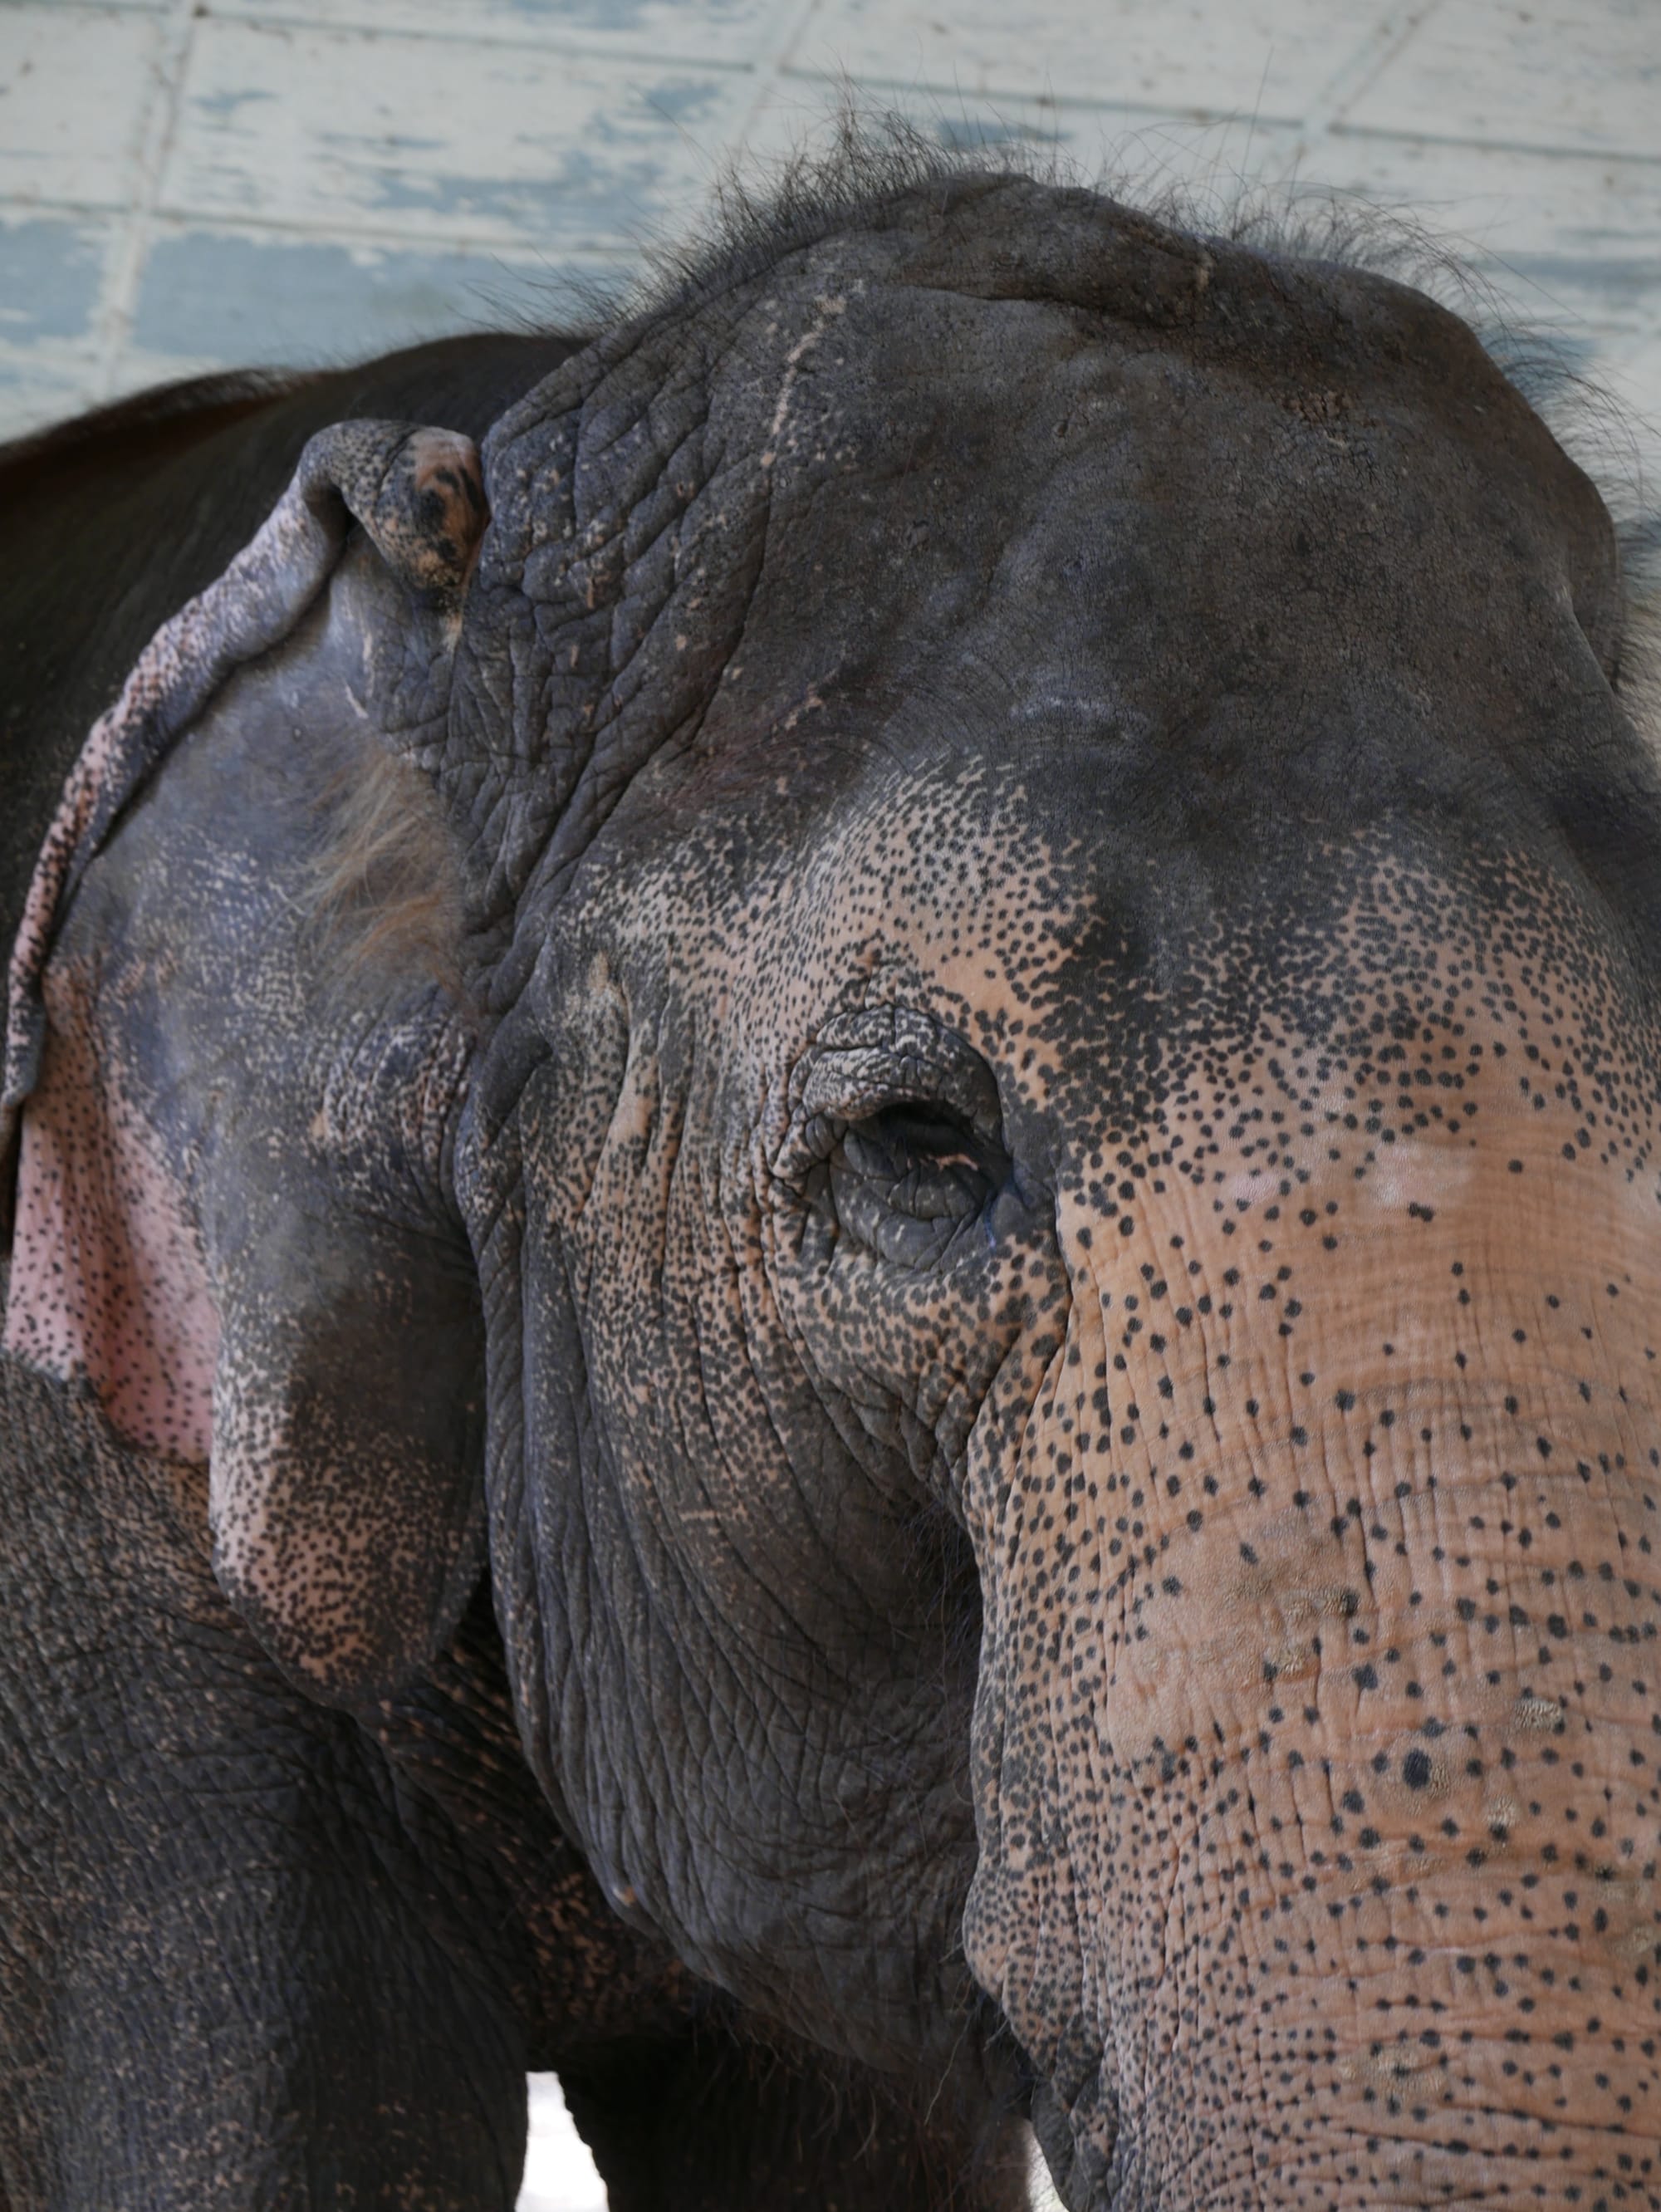 Photo by Author — elephant at Yadanabon Zoo, Mandalay, Myanmar